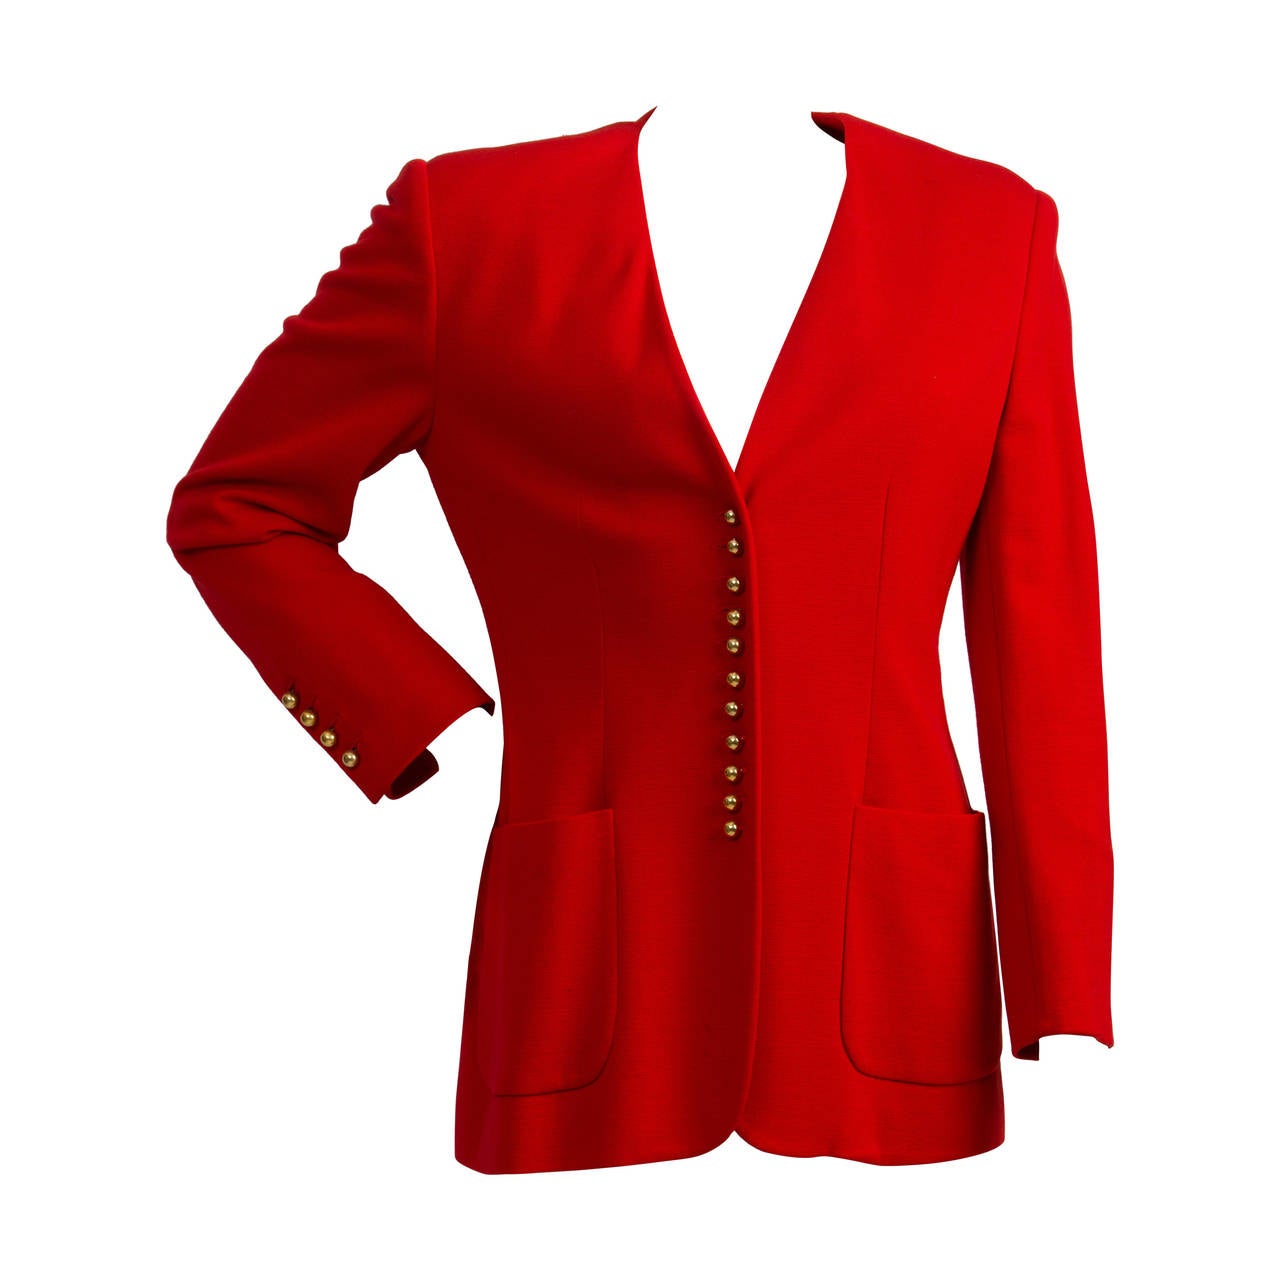 Años 80 Moschino Couture Chaqueta roja